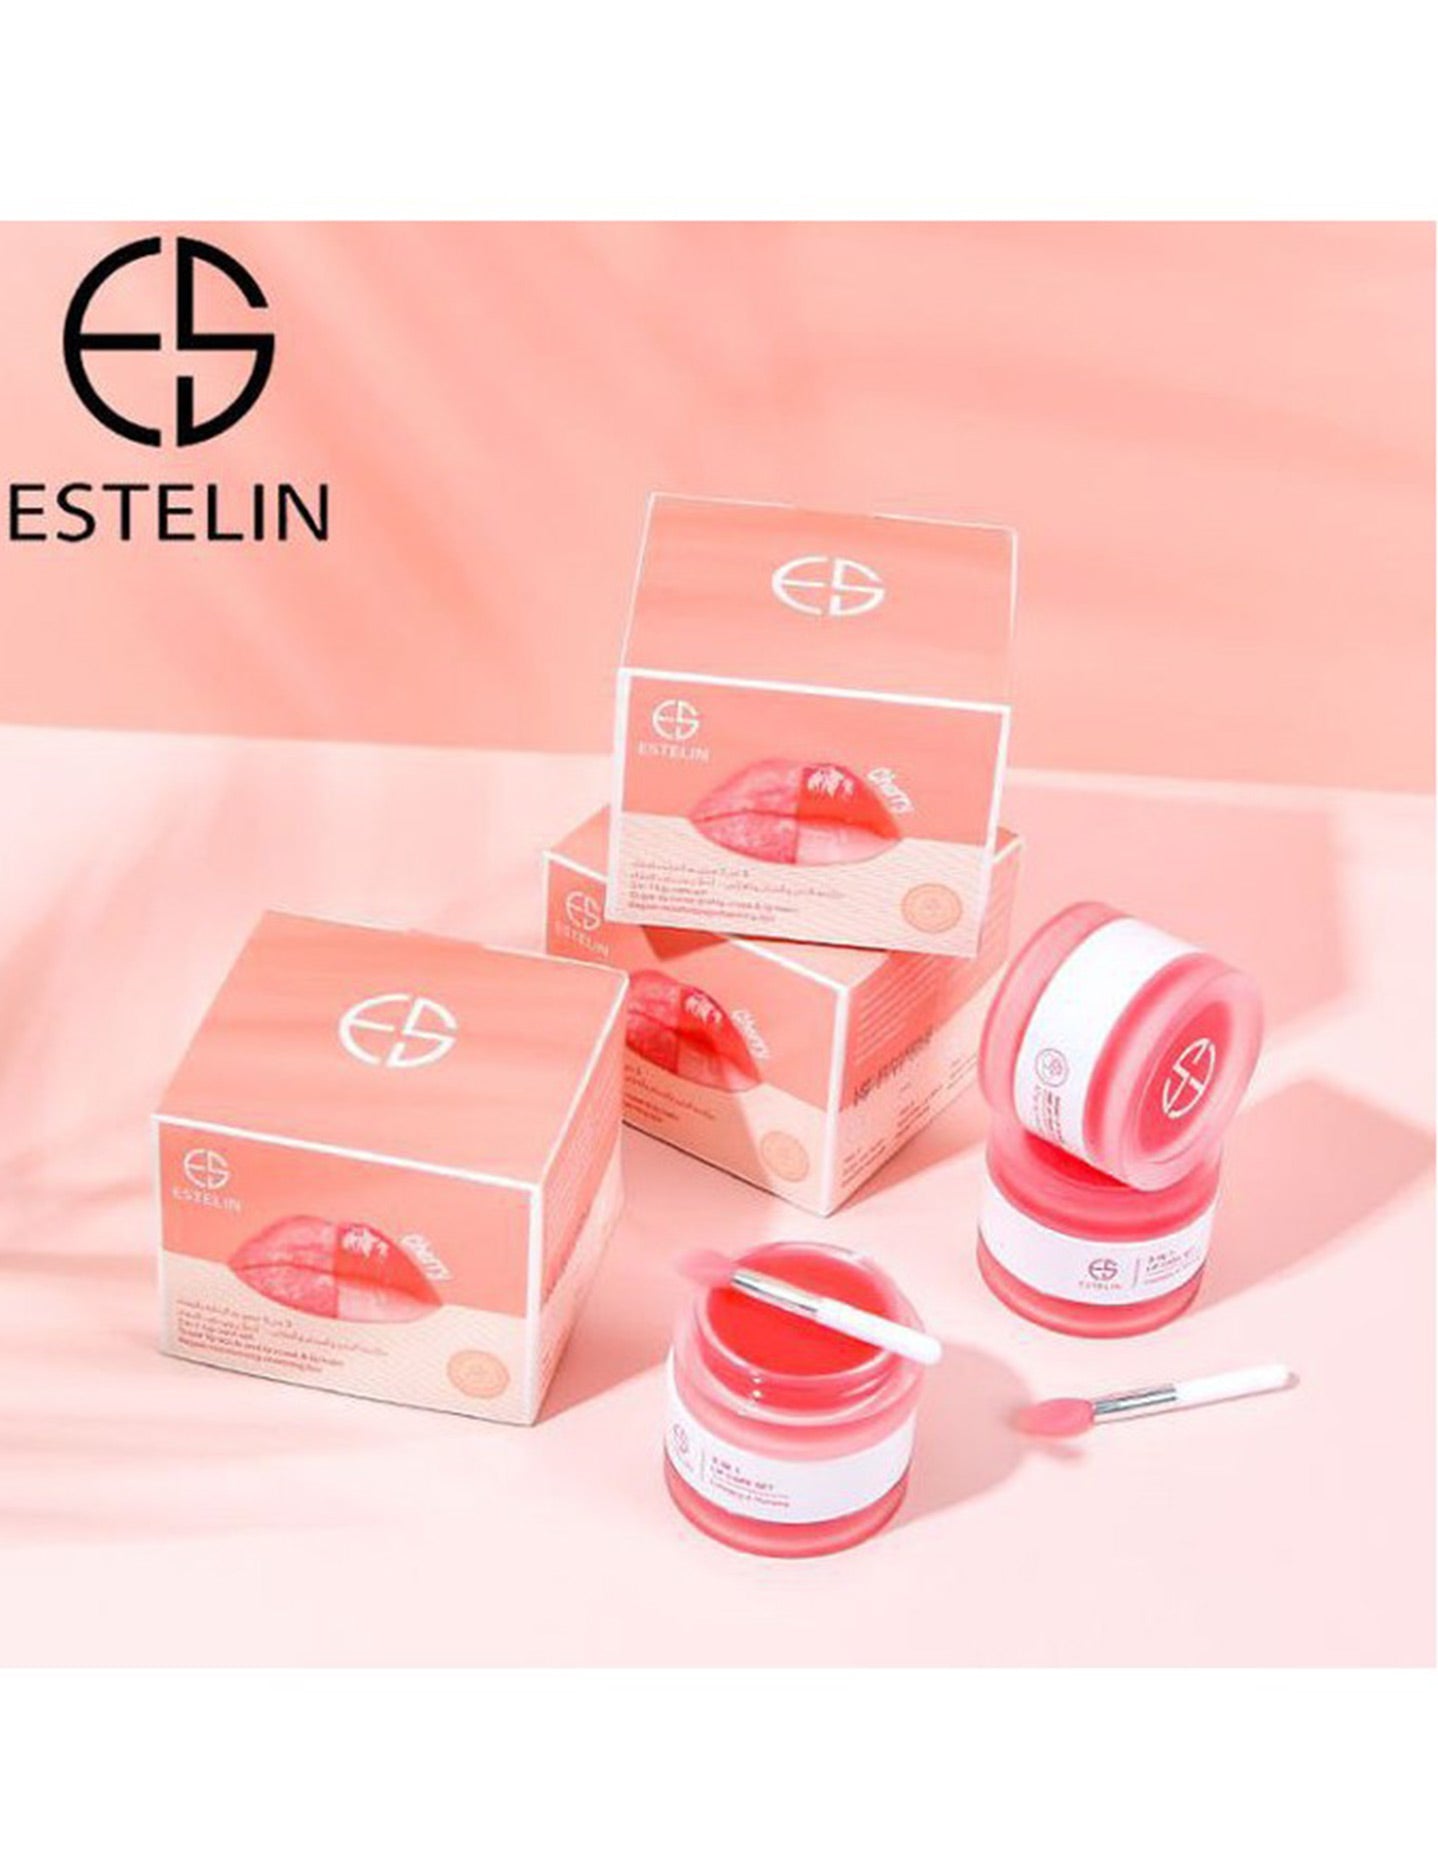 Estelin 3in1 lip care set from Cherry 5g  5g